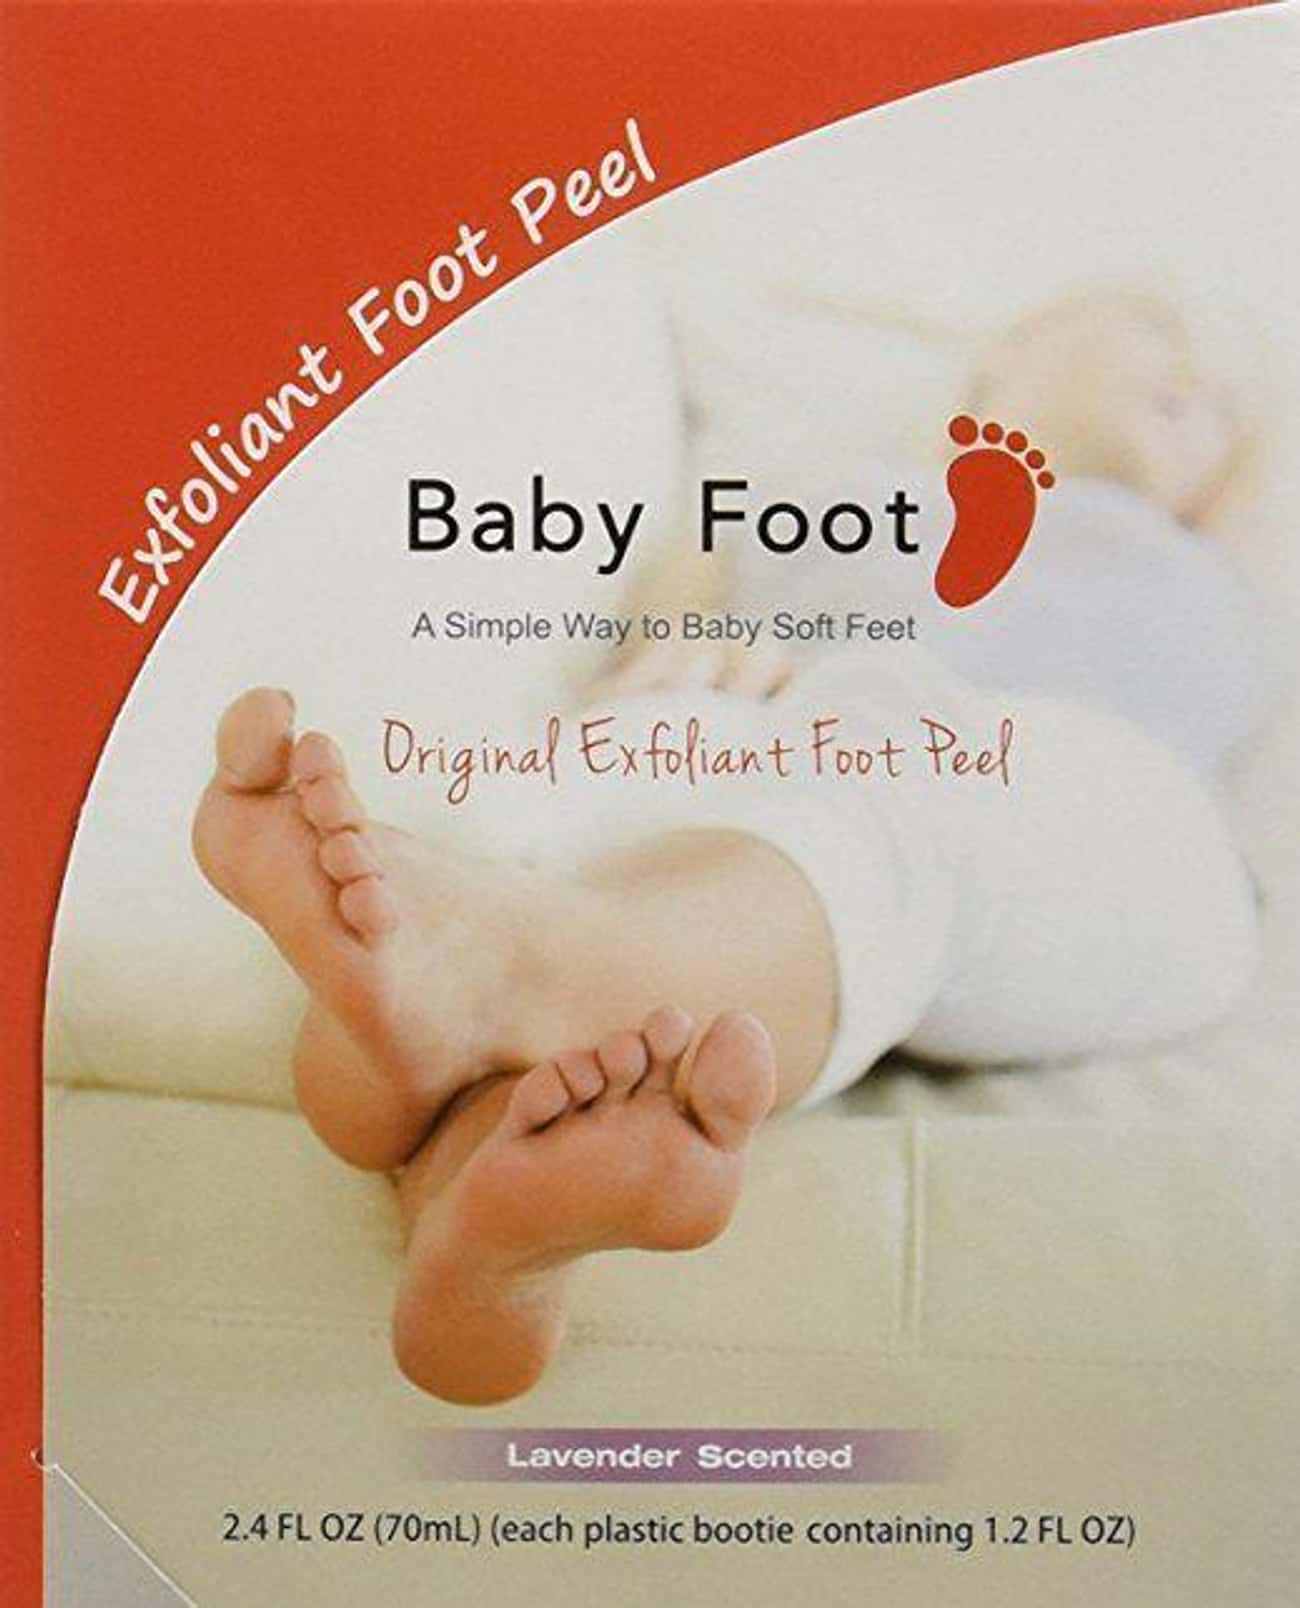 Exfoliant Foot Peel By Baby Foot